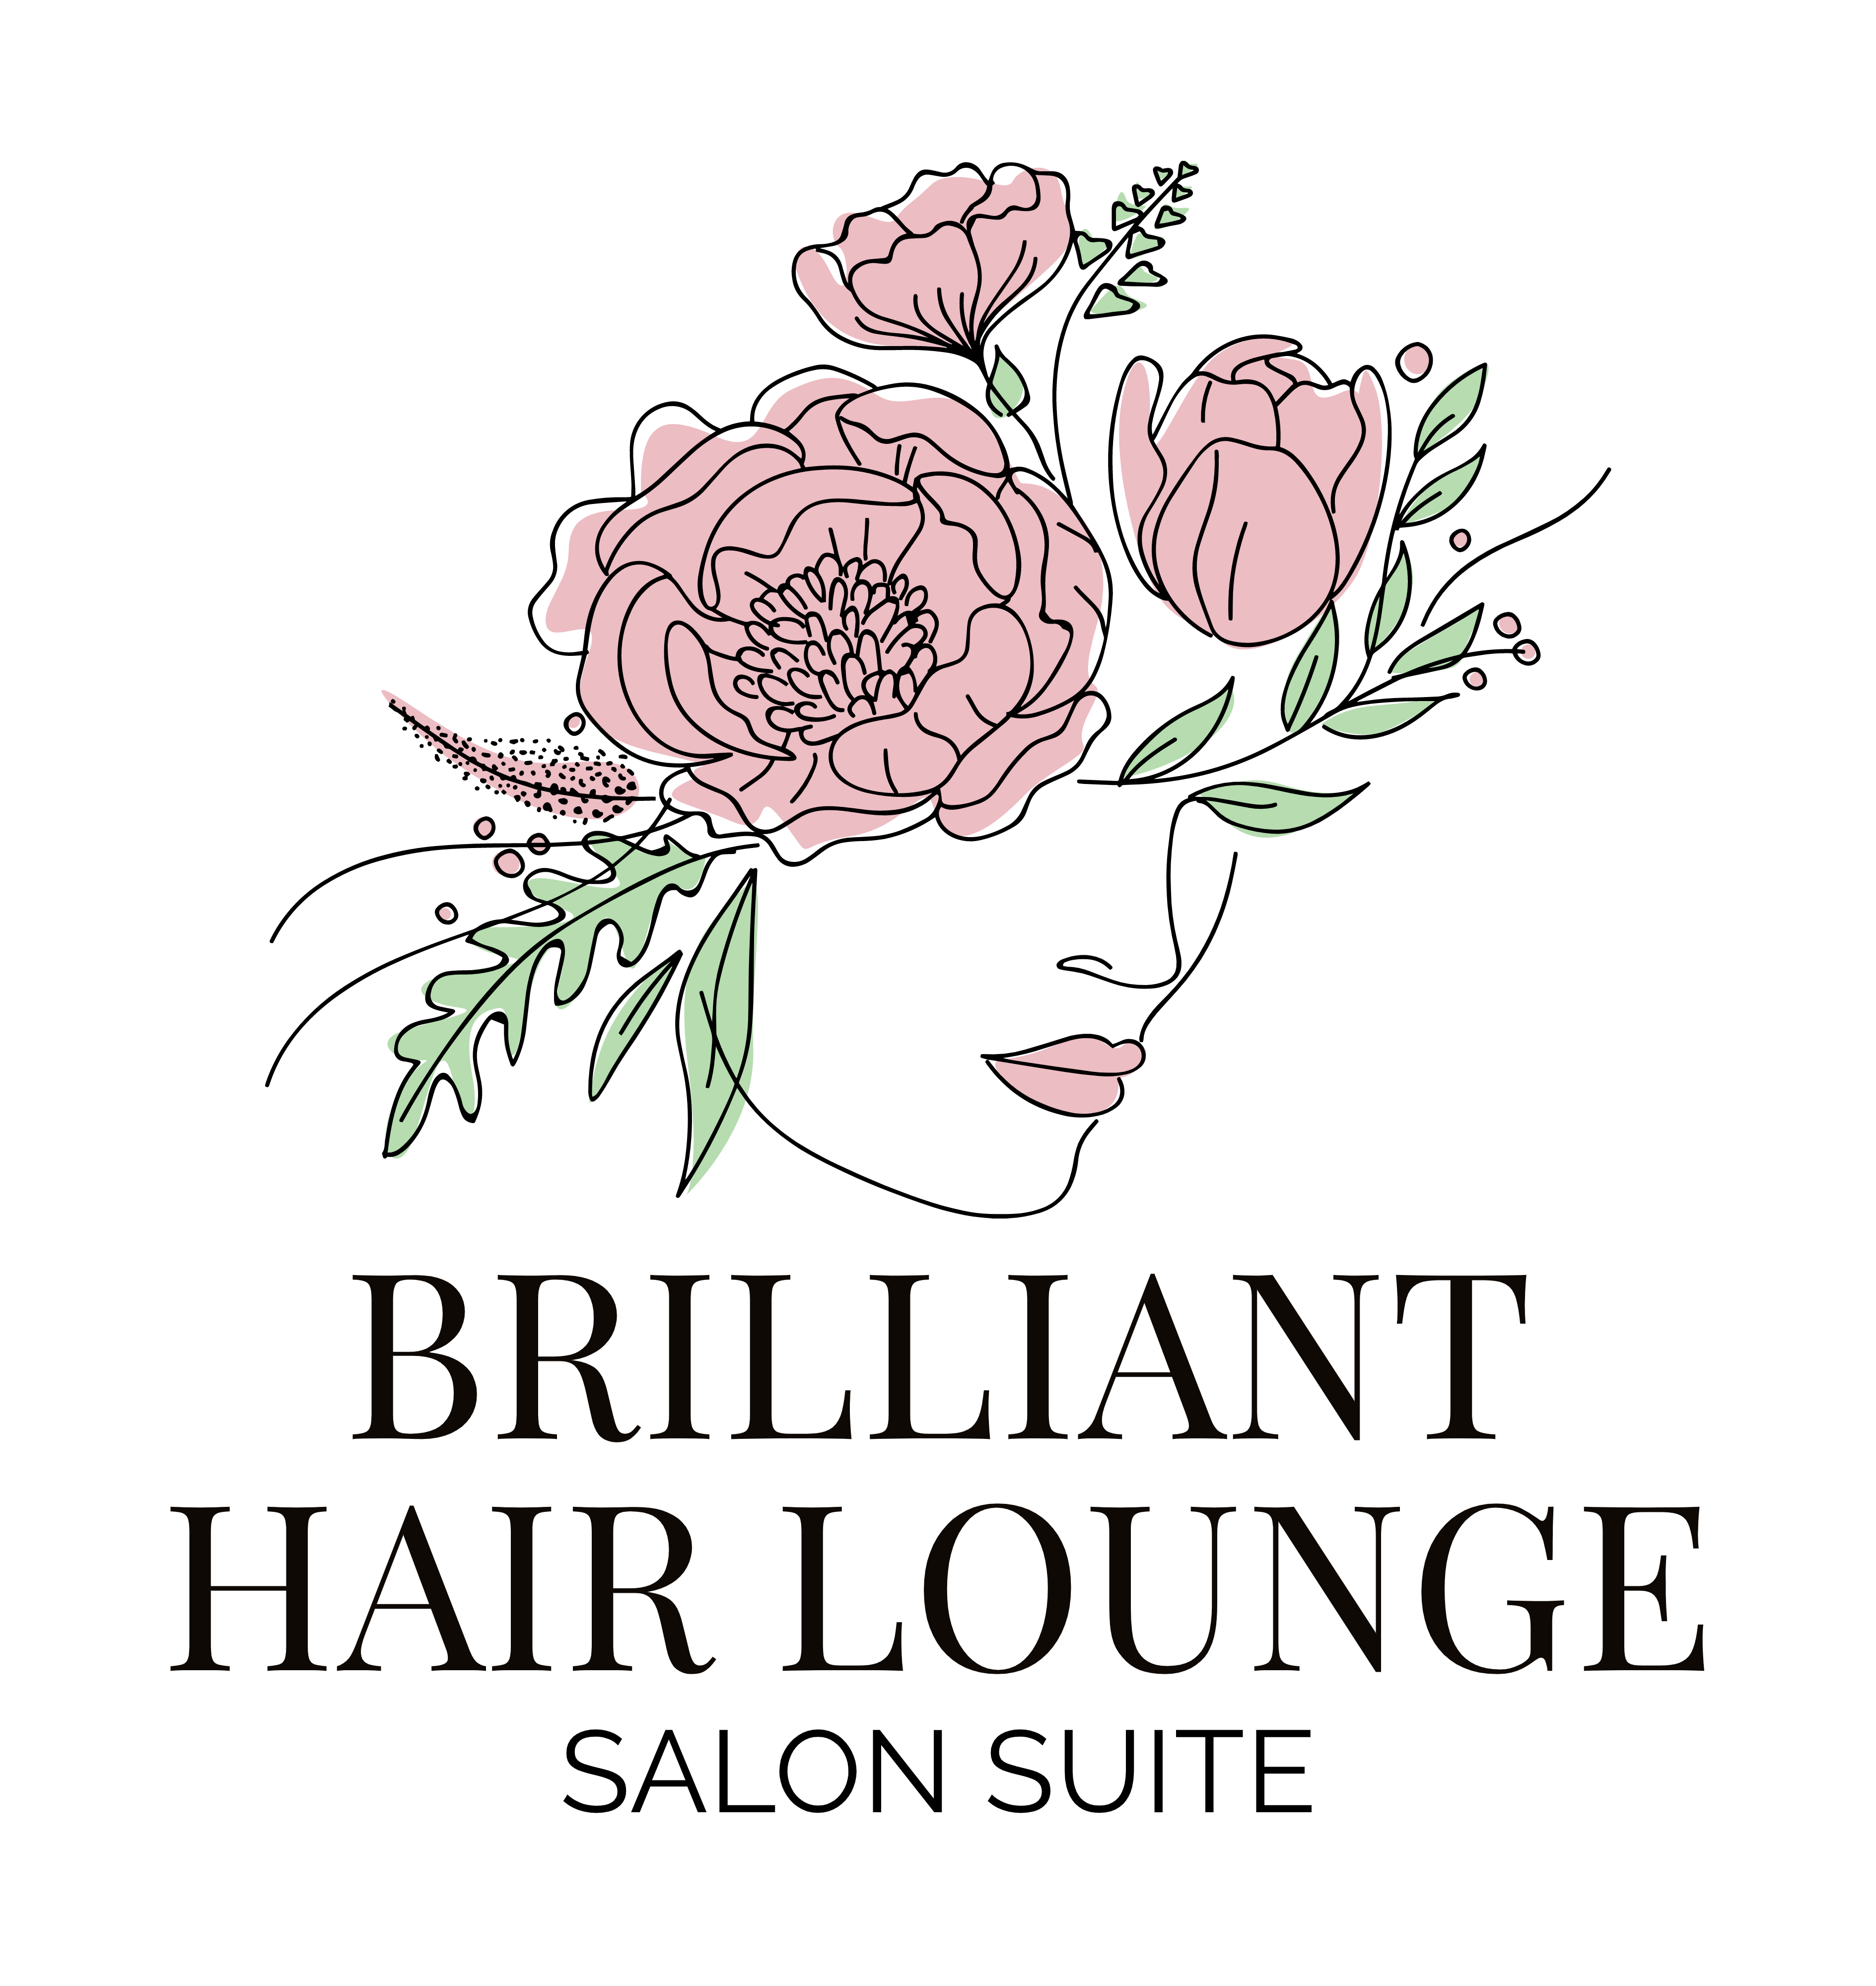 Brilliant Hair Lounge